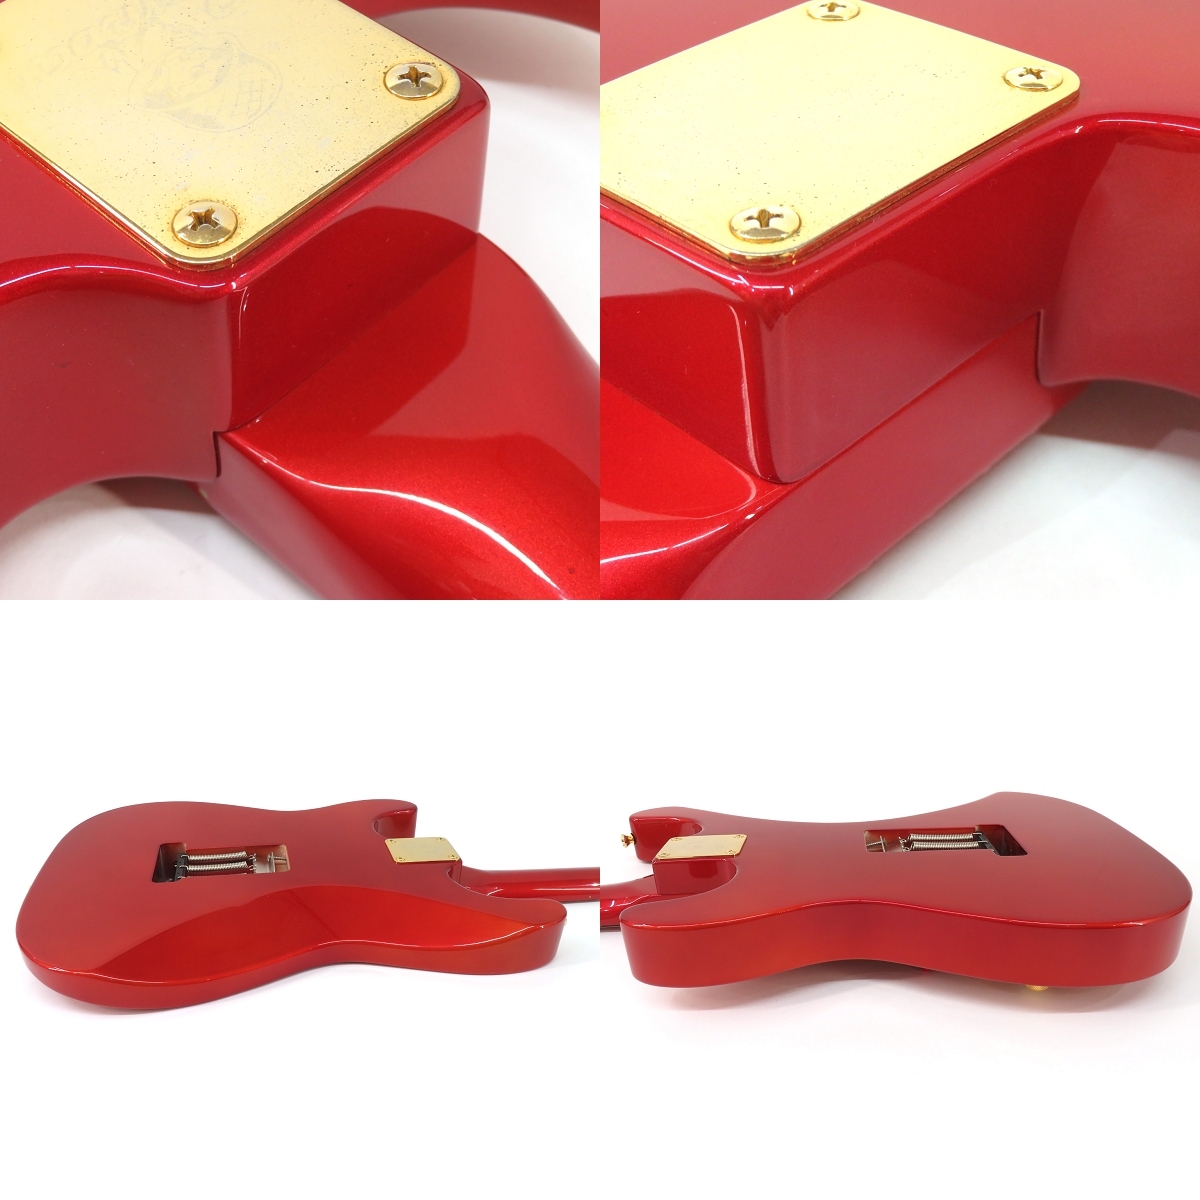 Combat Stratocaster SSH All Red（中古/送料無料）【楽器検索デジマート】